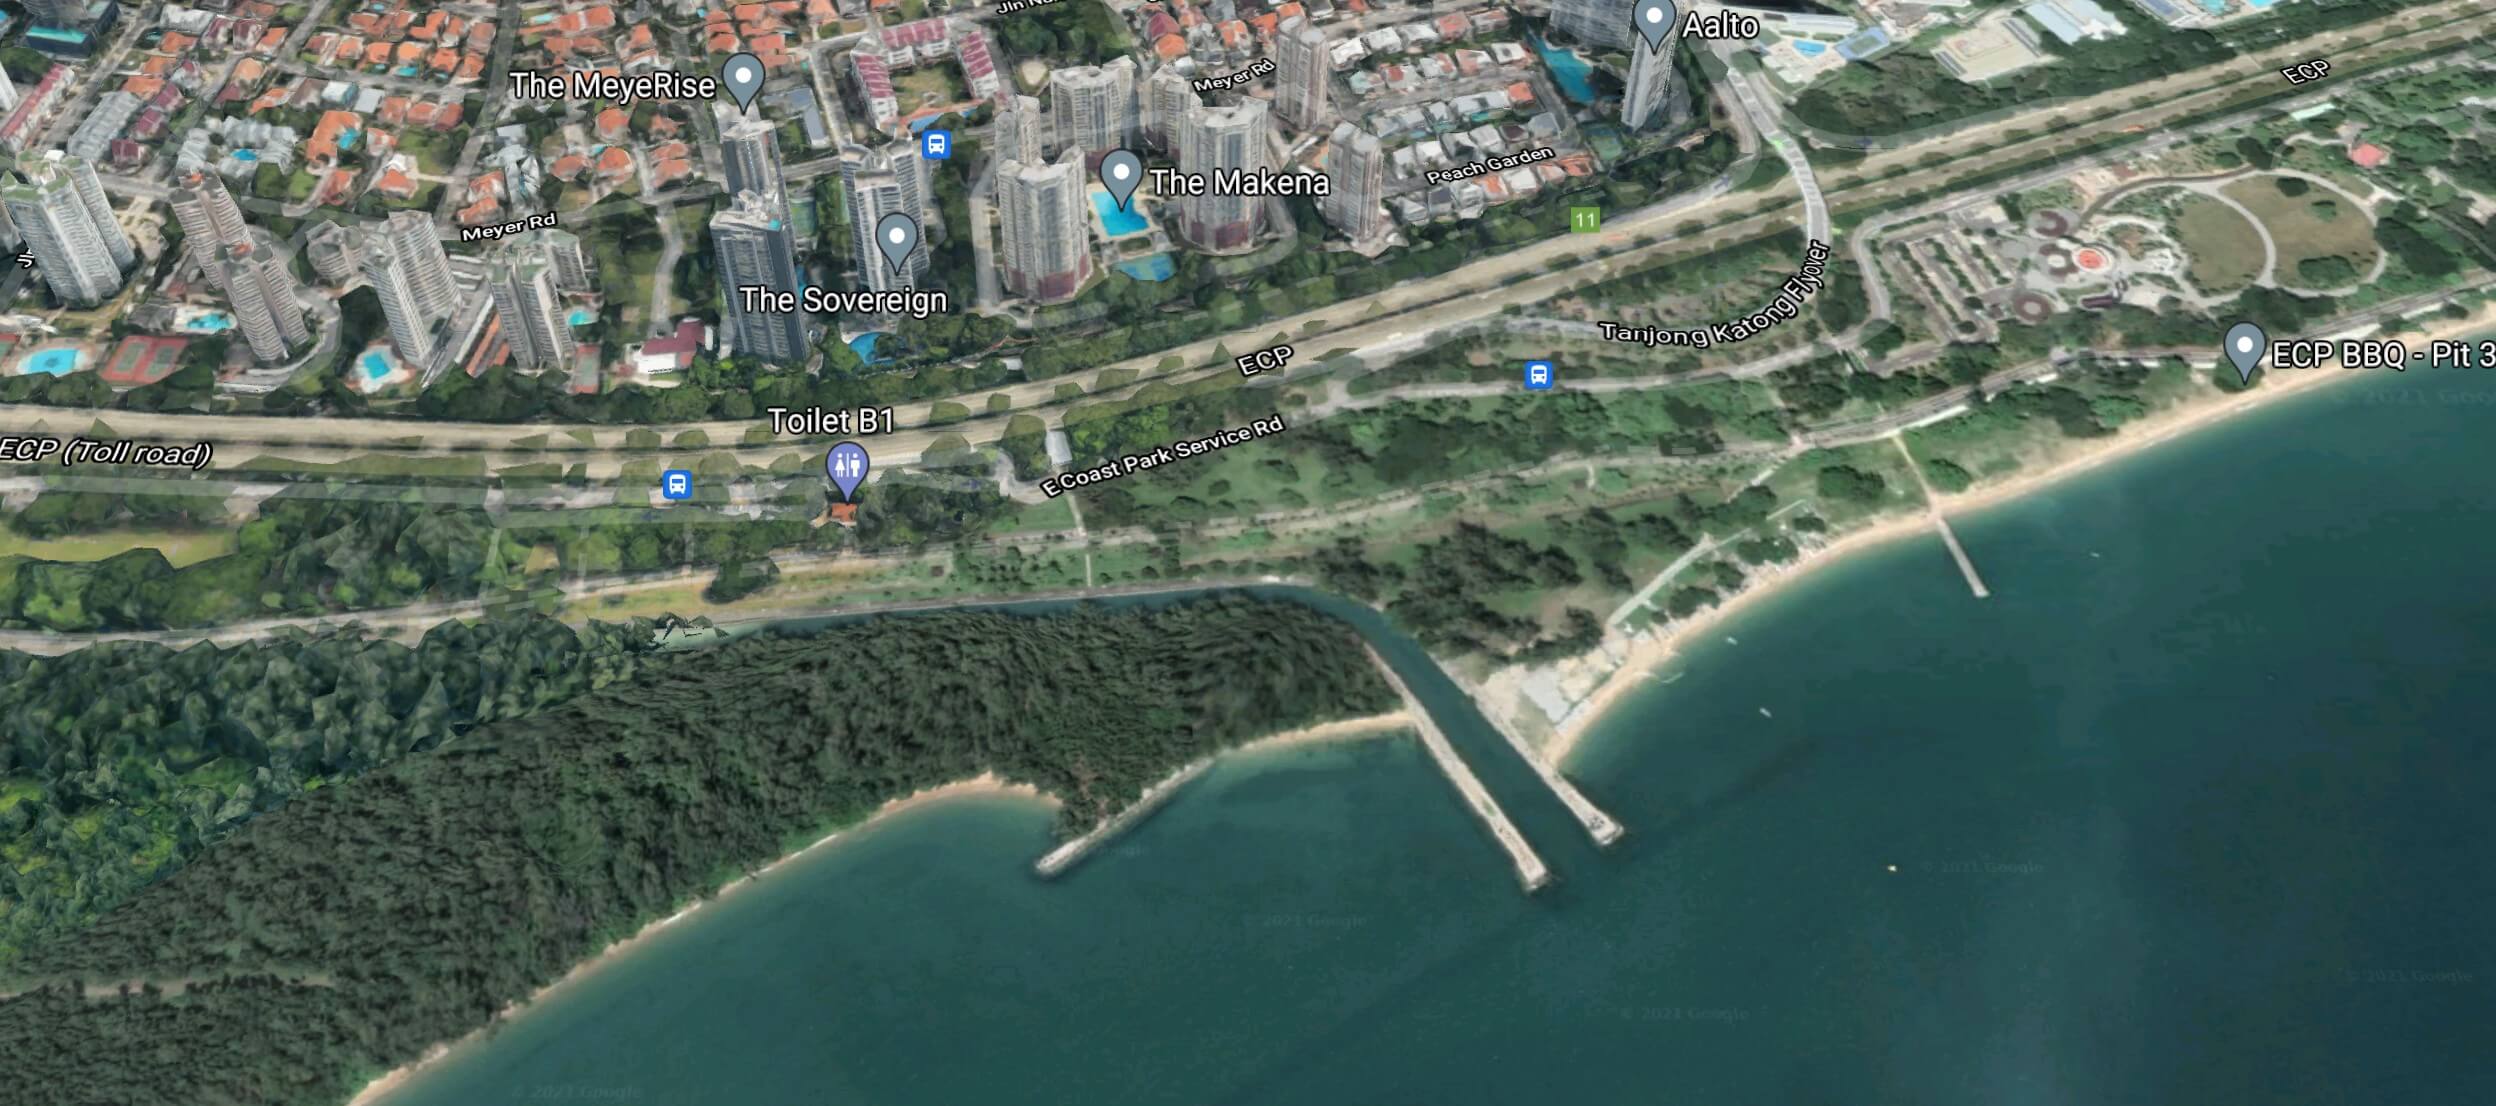 Google Maps view of East Coast Park, Singapore